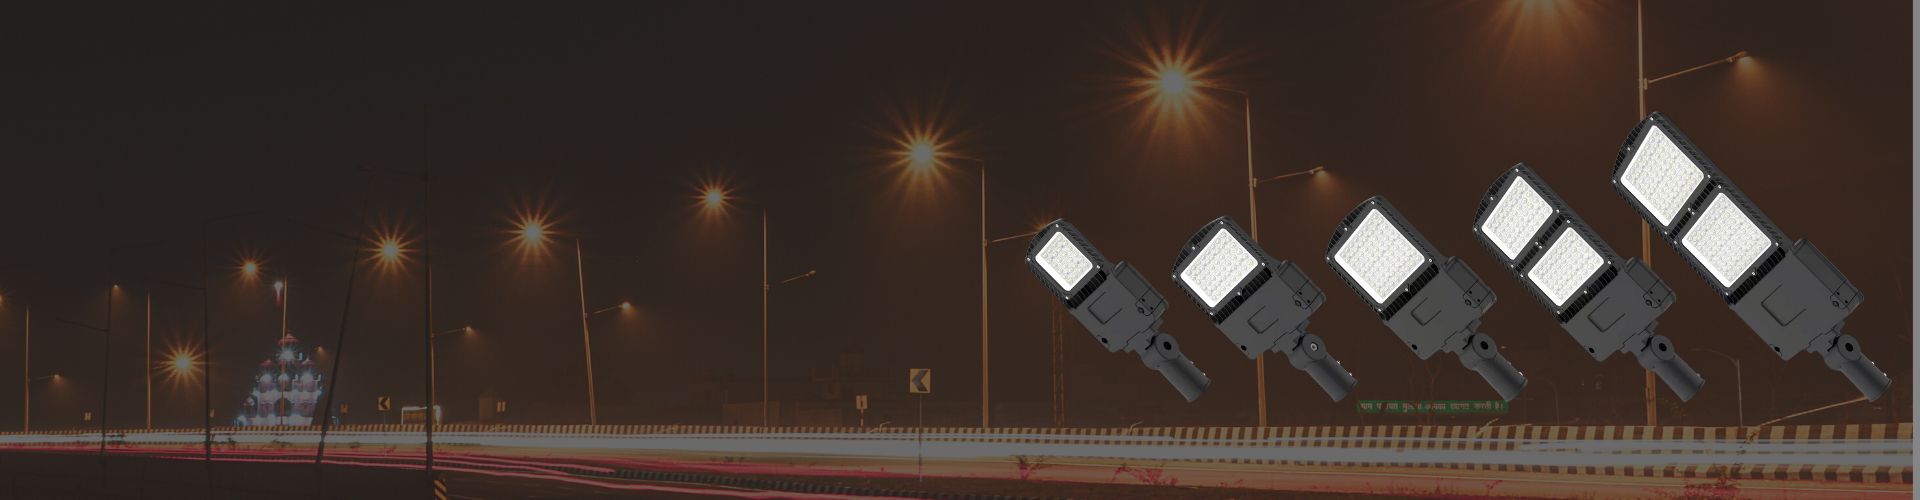 LED street lights manufacture